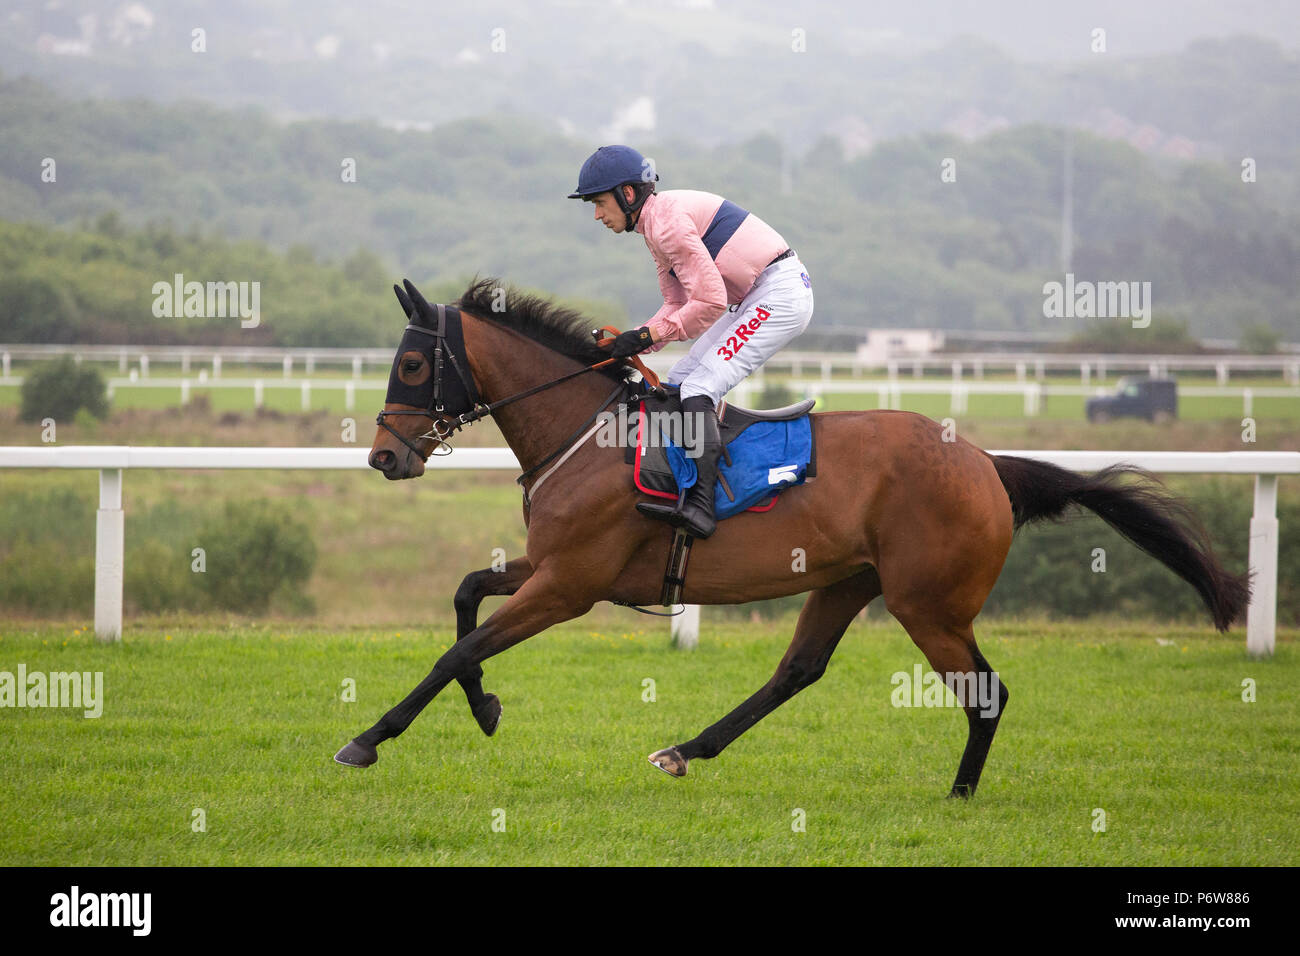 Racehorse Lily Of Leysbourne ridden by jockey Paddy Brennan Stock Photo